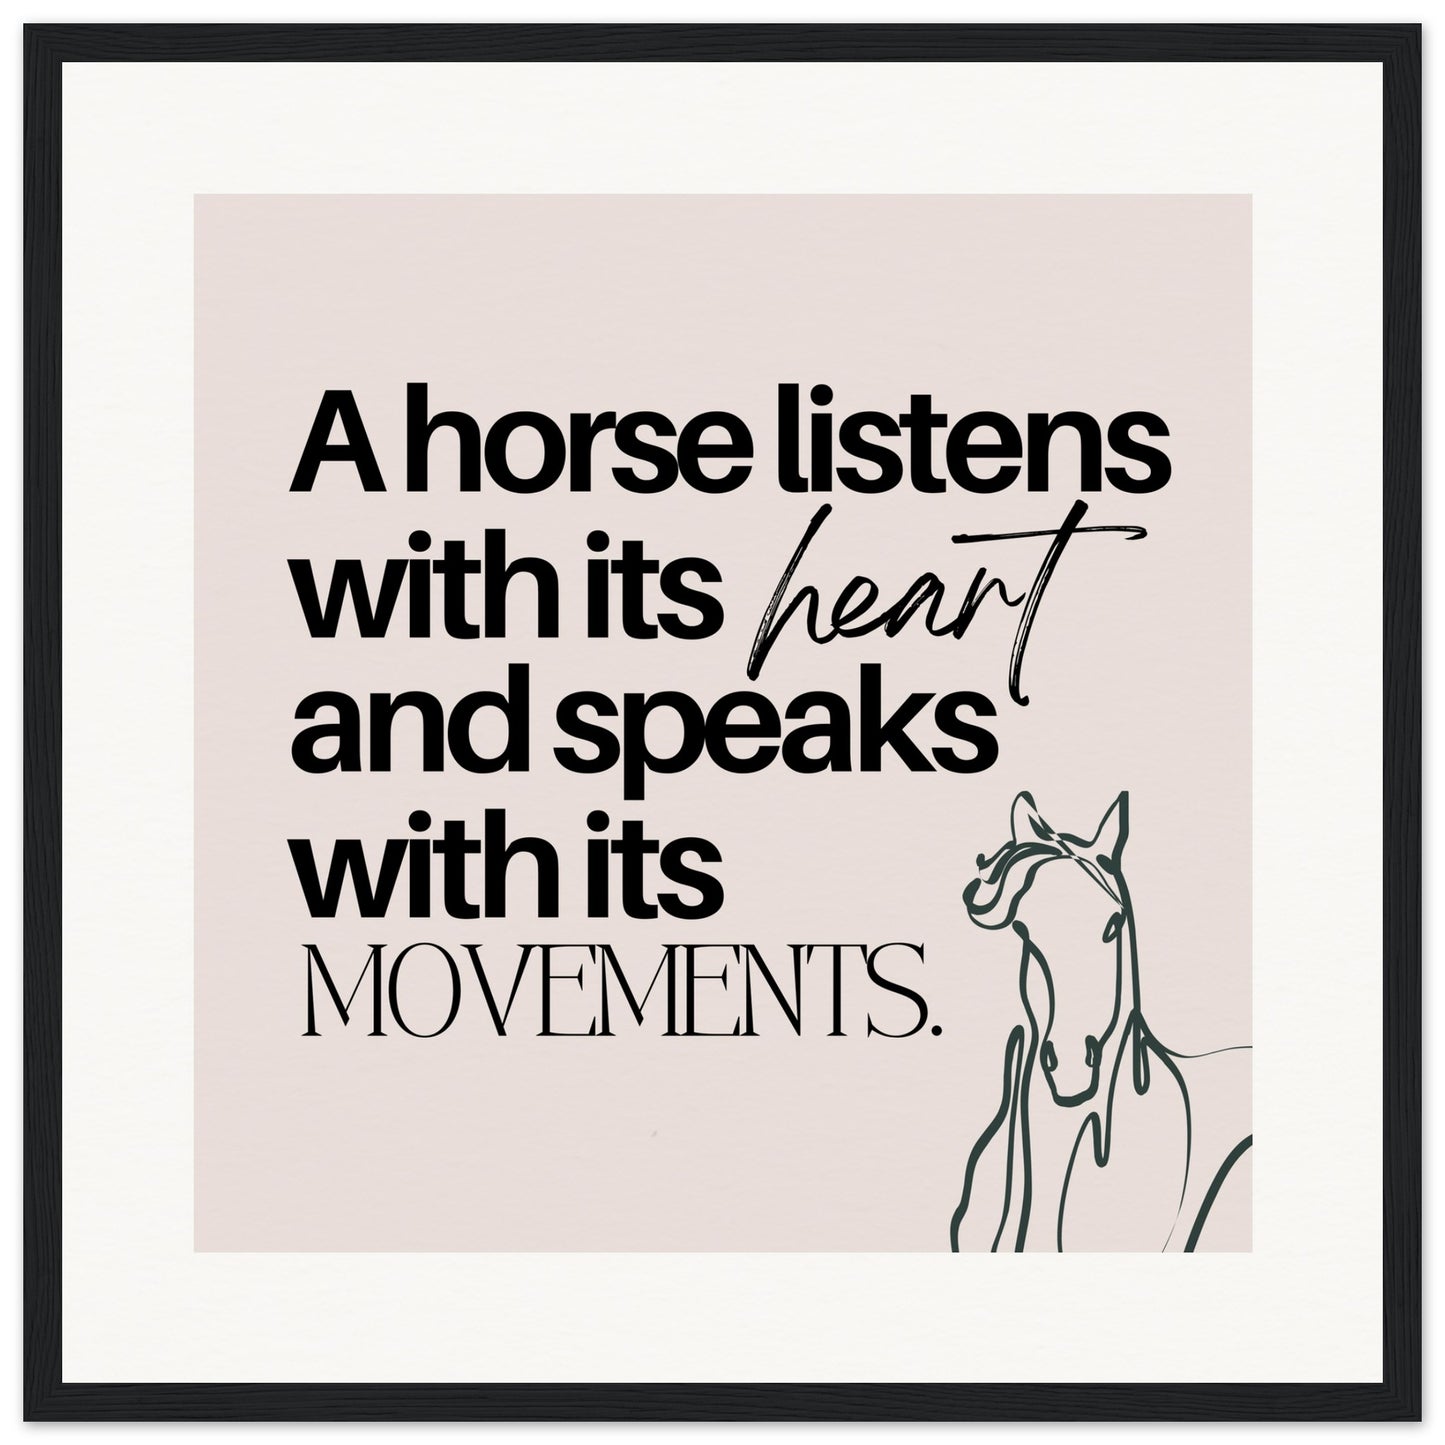 A horse listens: Wooden Framed Poster